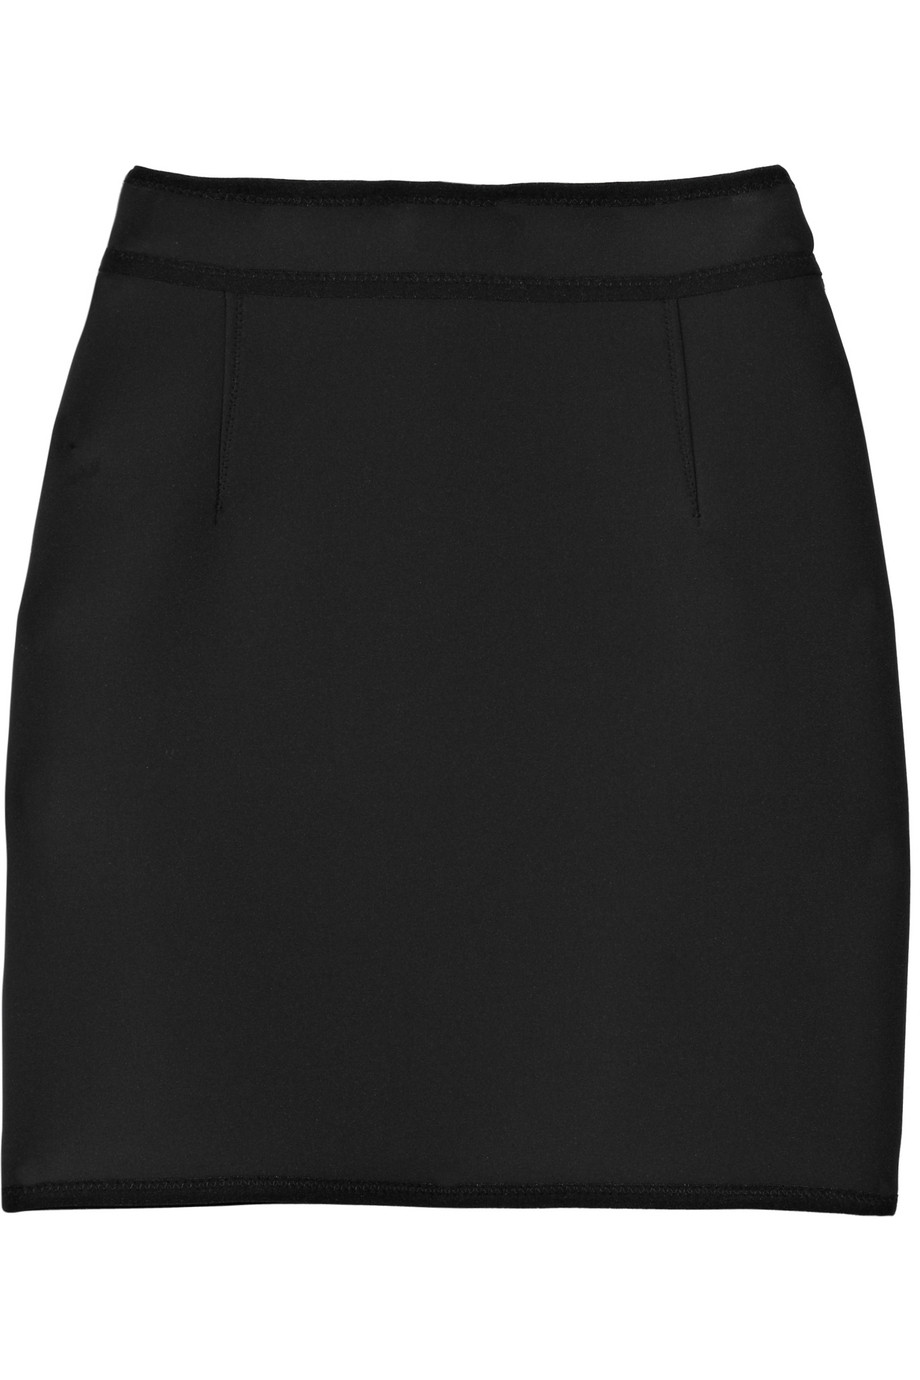 Black Skirt A Line